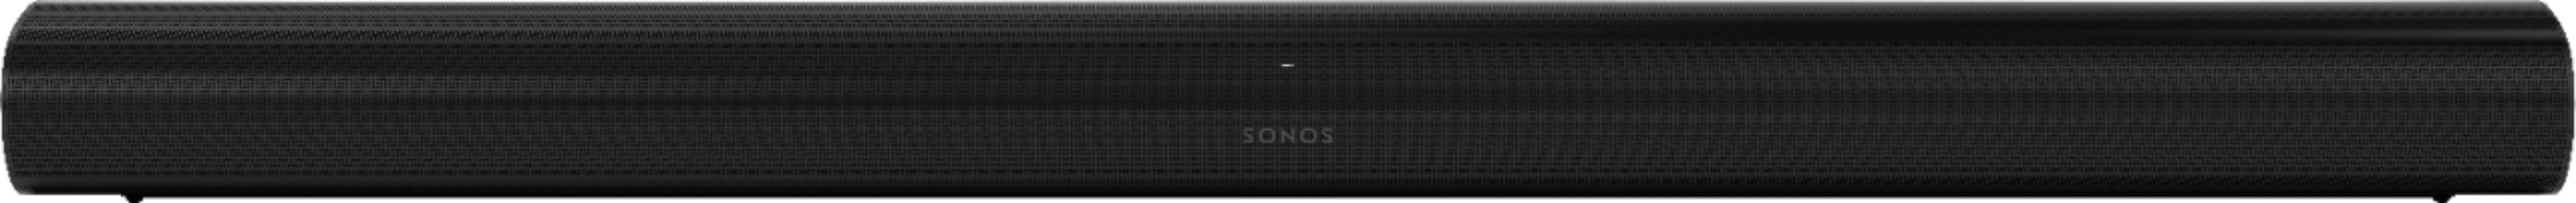 NEW Sonos Arc Club 3023BW Smart Soundbar Black ARCG1US1BKHB